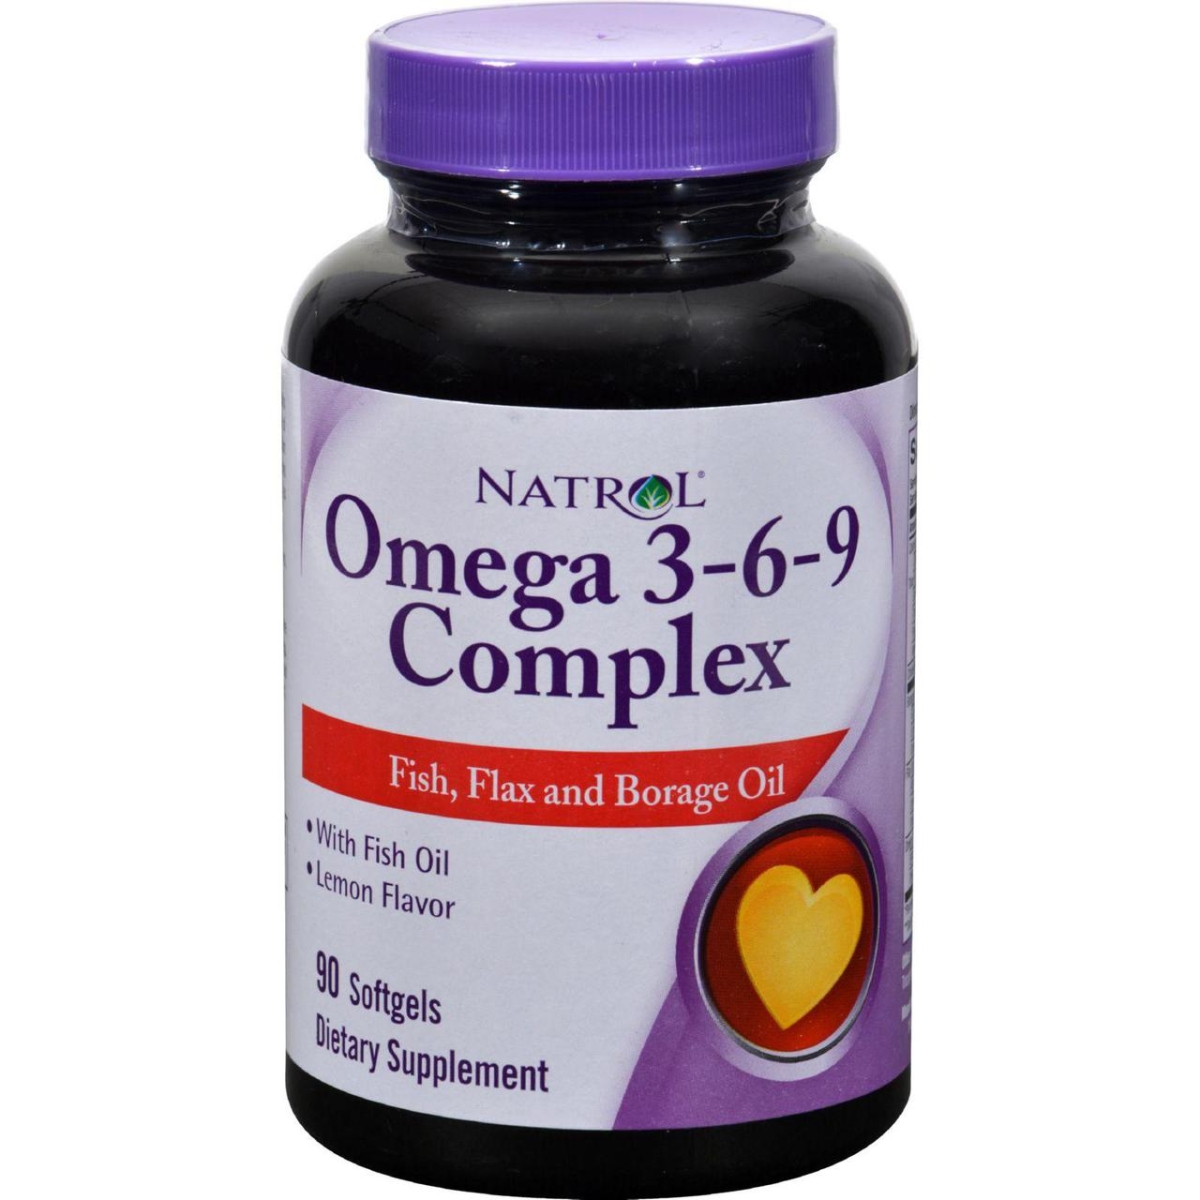 Hg0343988 Omega 3-6-9 Complex Lemon - 90 Softgels